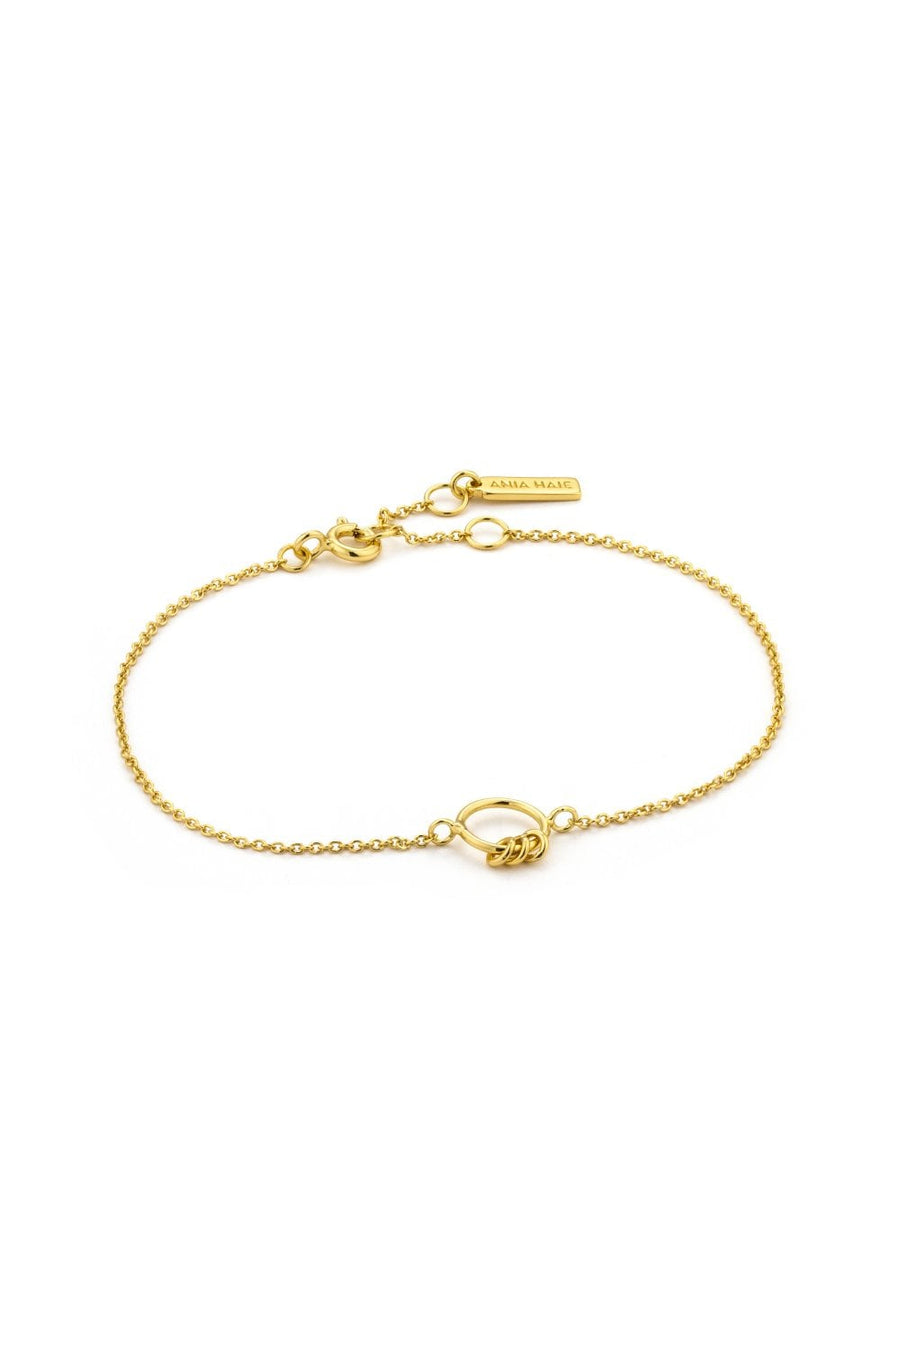 Ania Haie Gold Modern Circles Bracelet